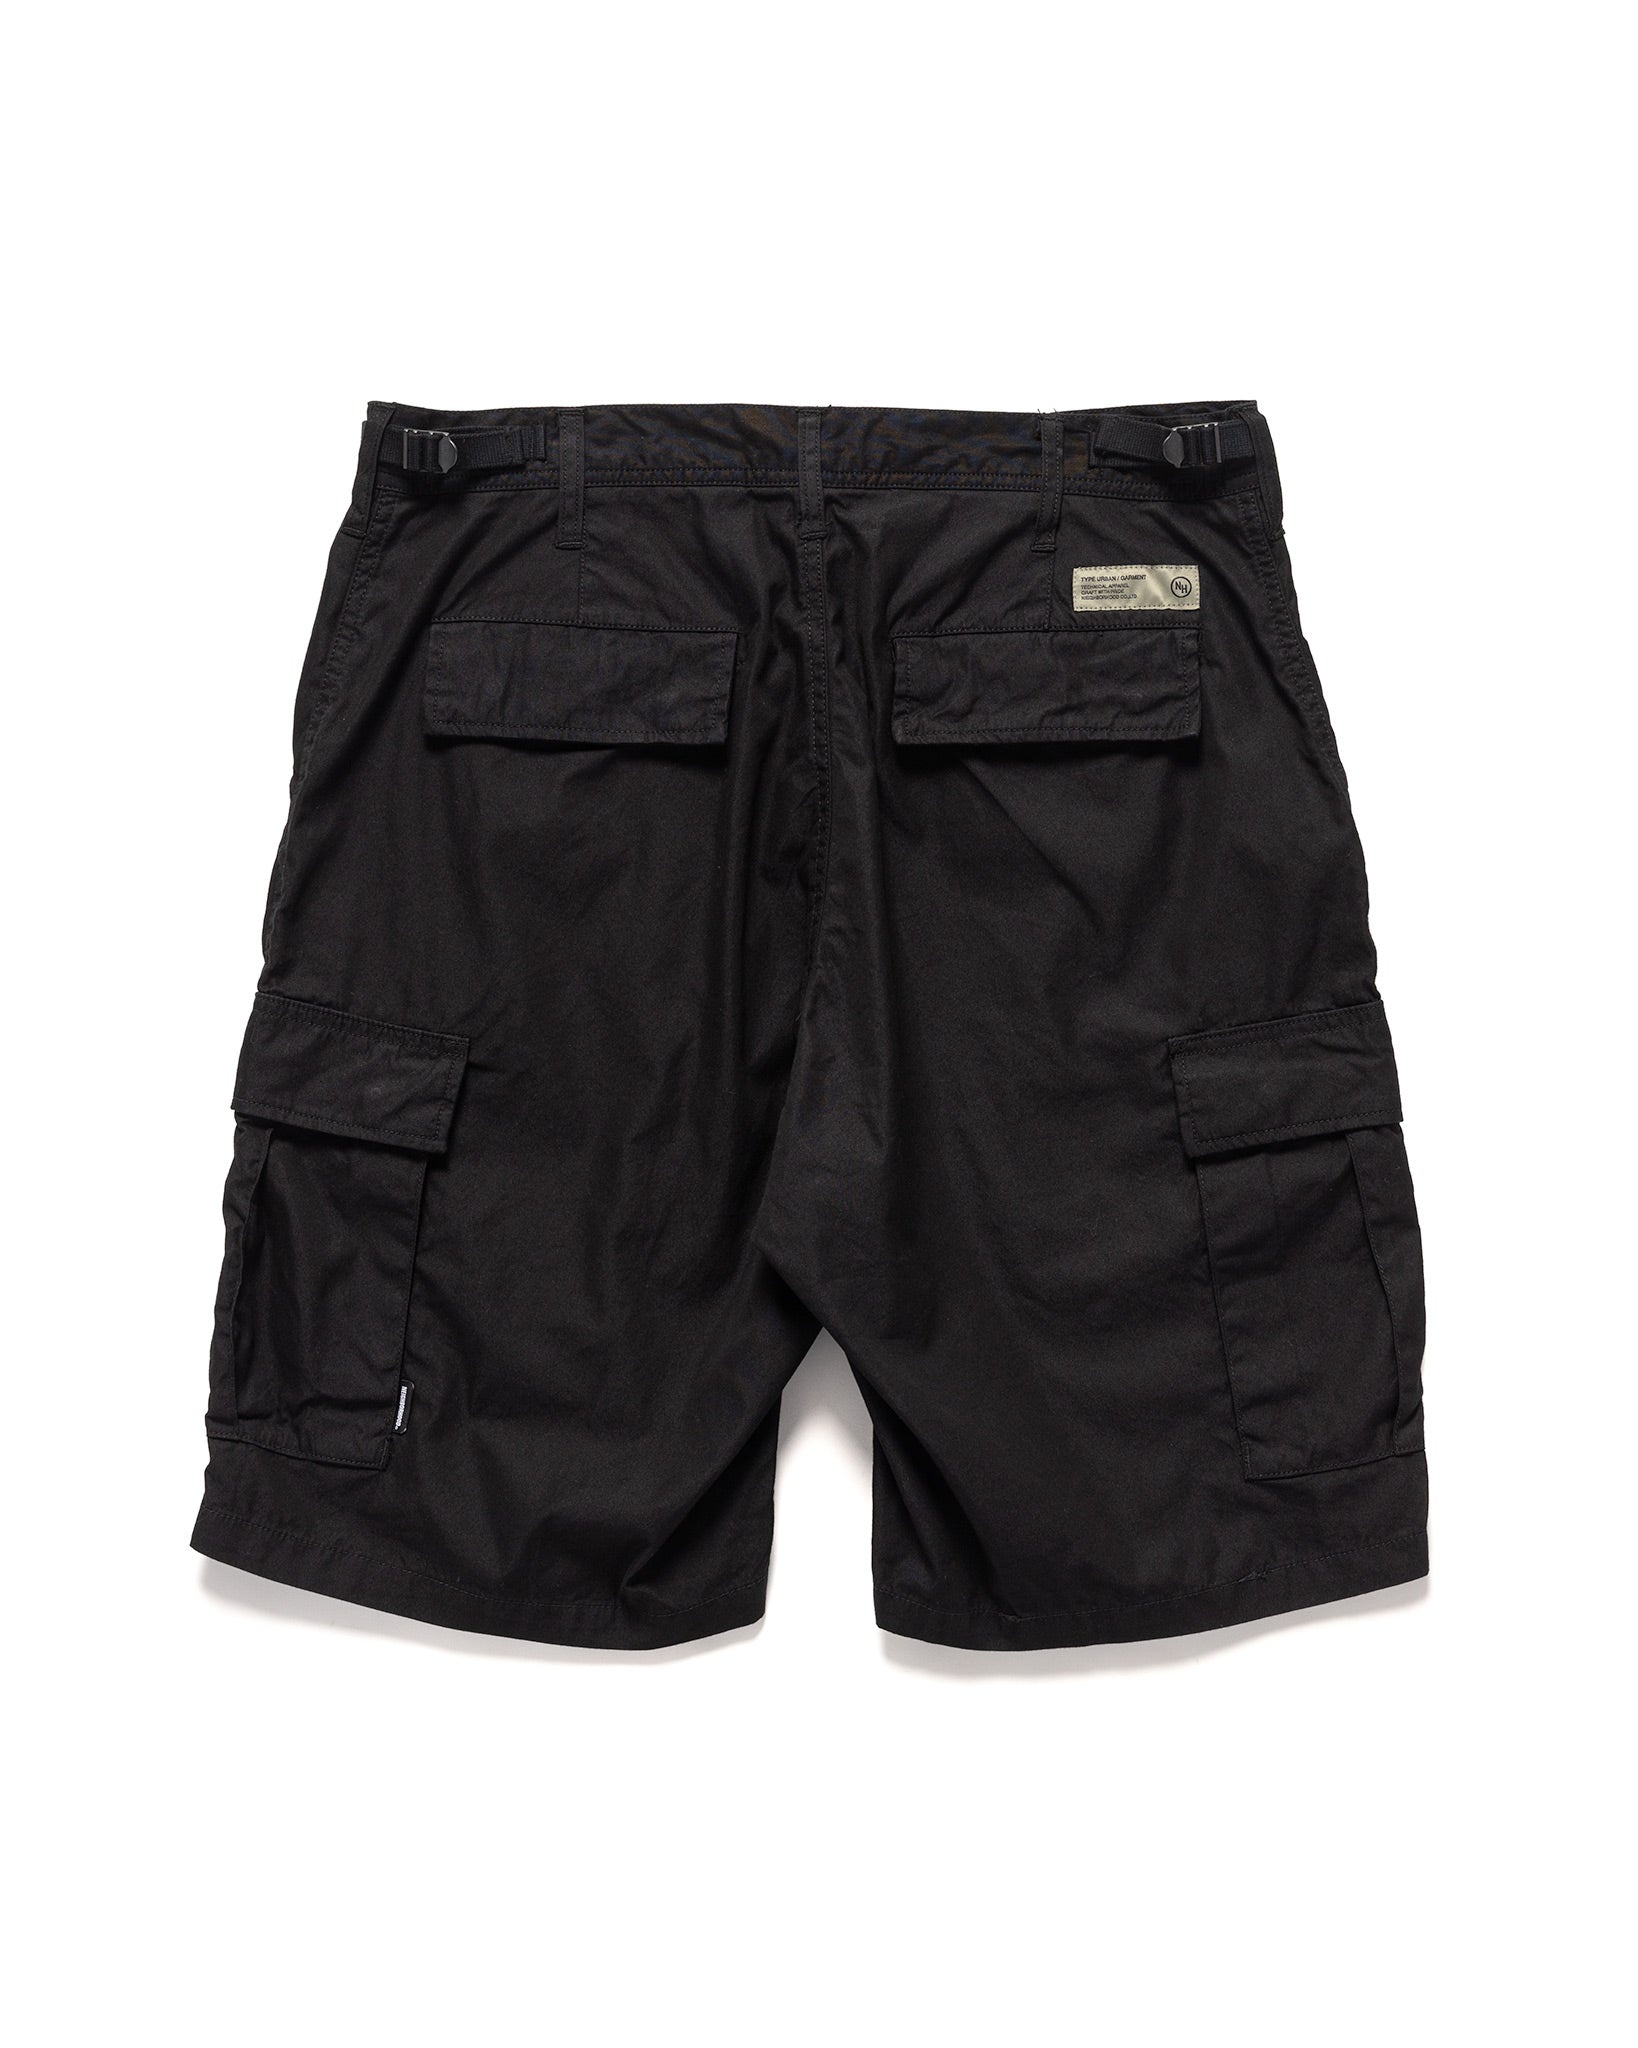 BDU Short Pants Black - 5